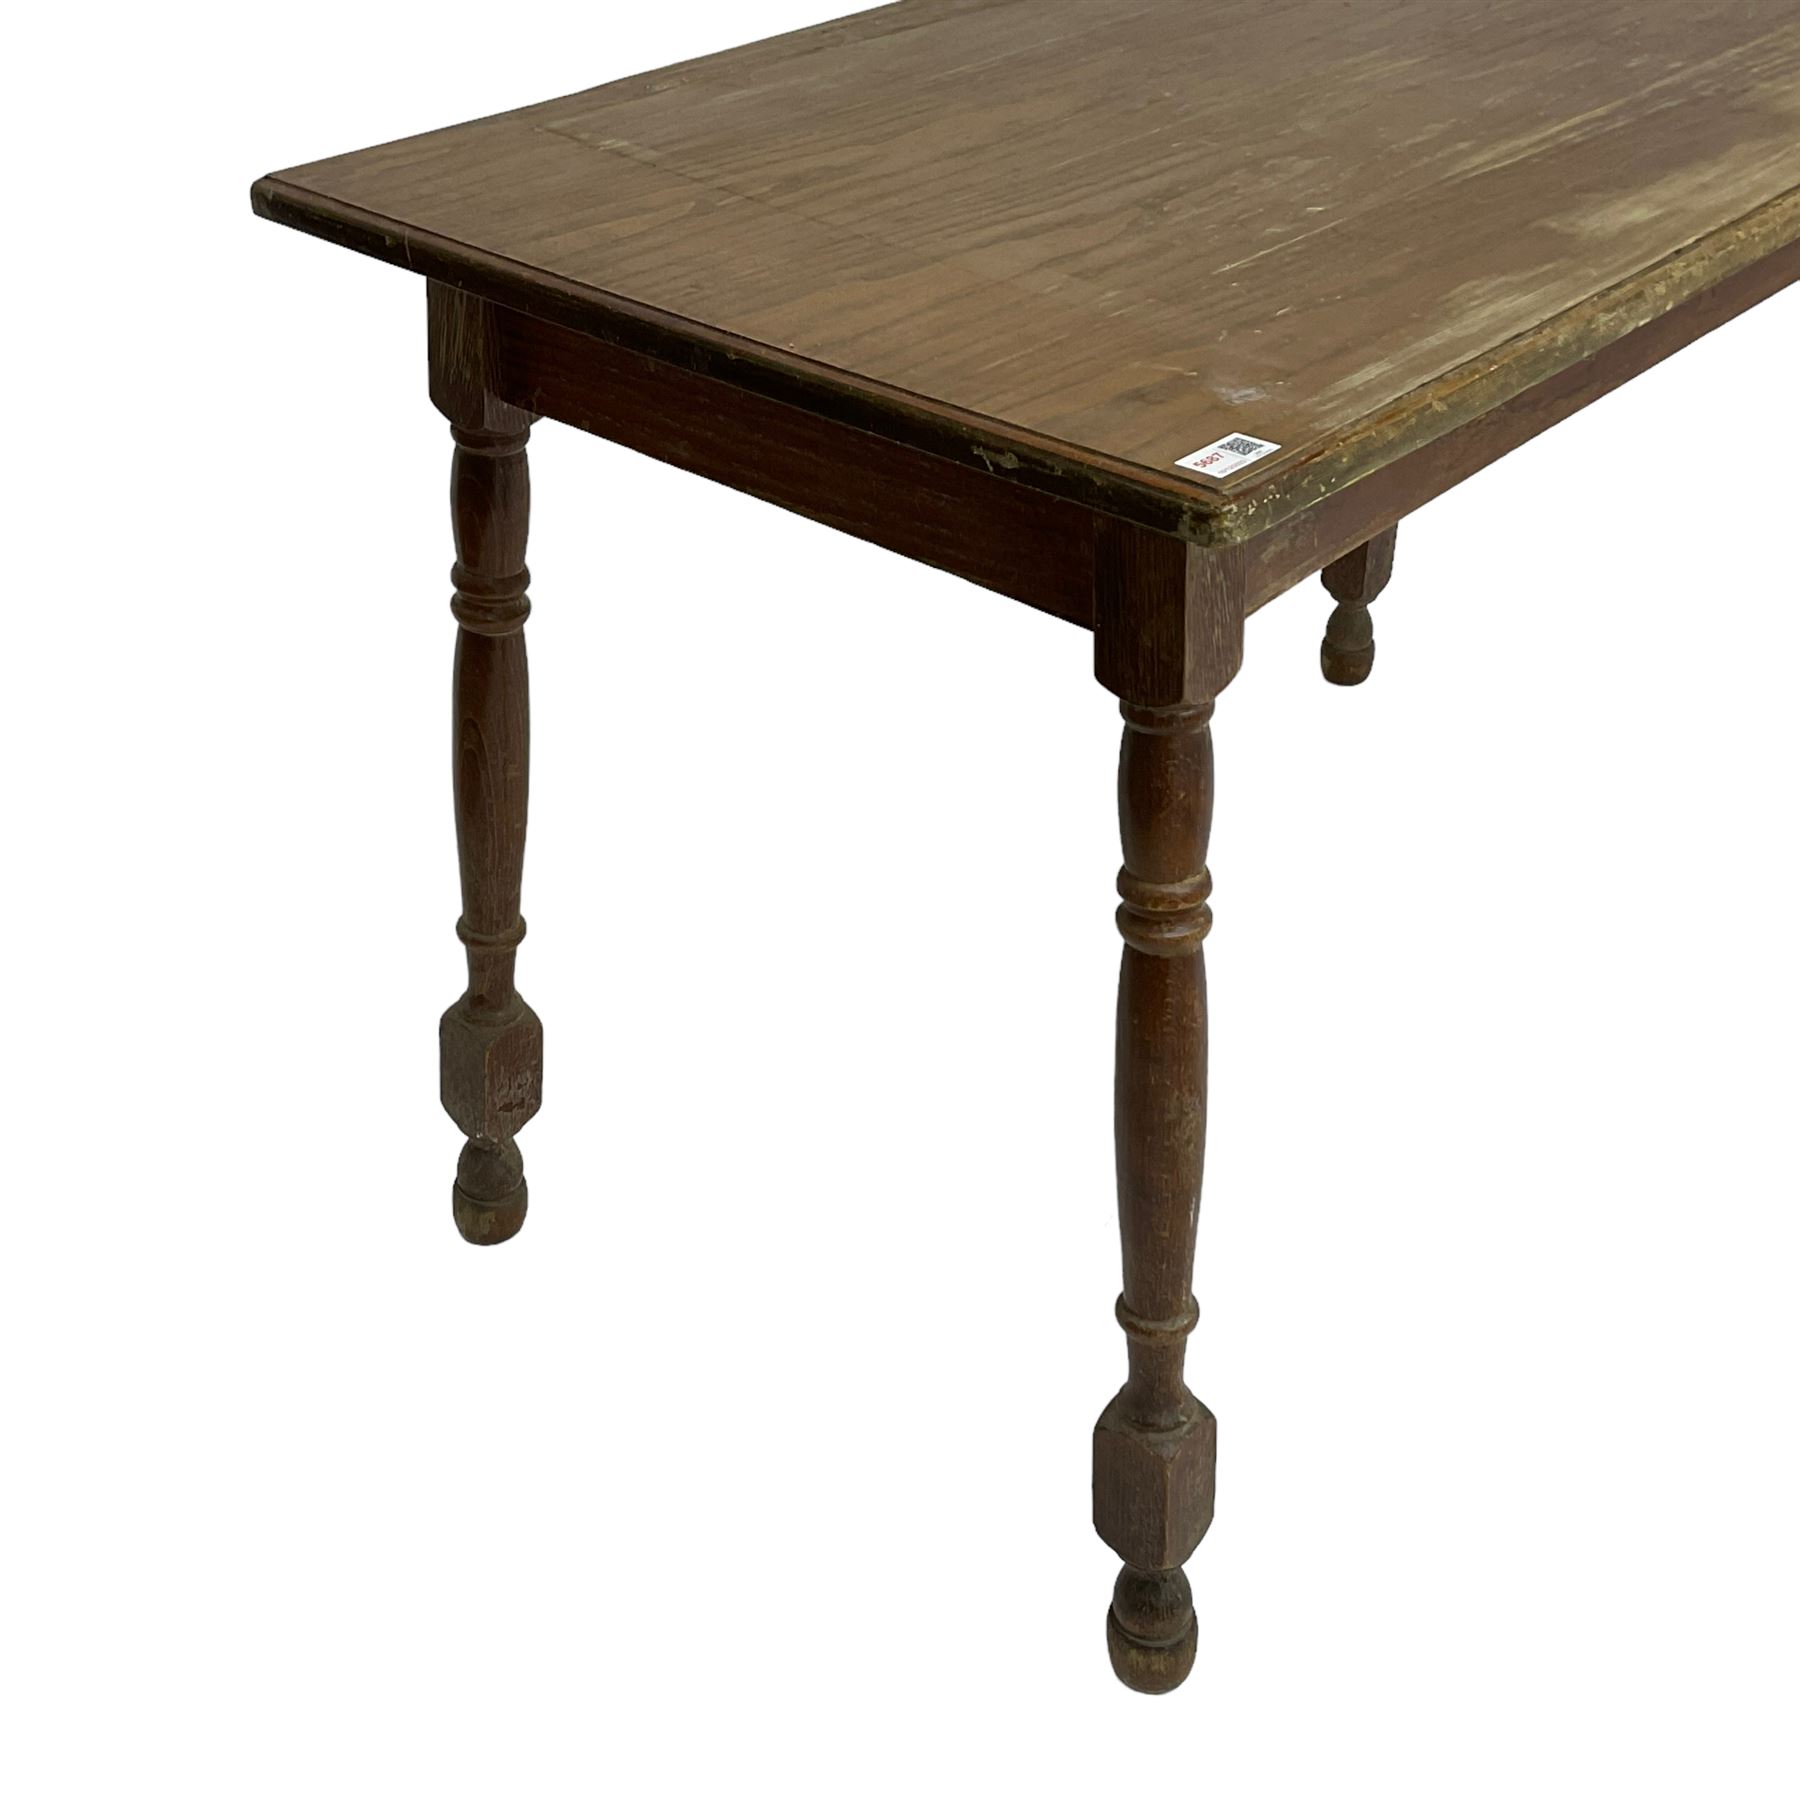 20th century oak table - Image 2 of 4